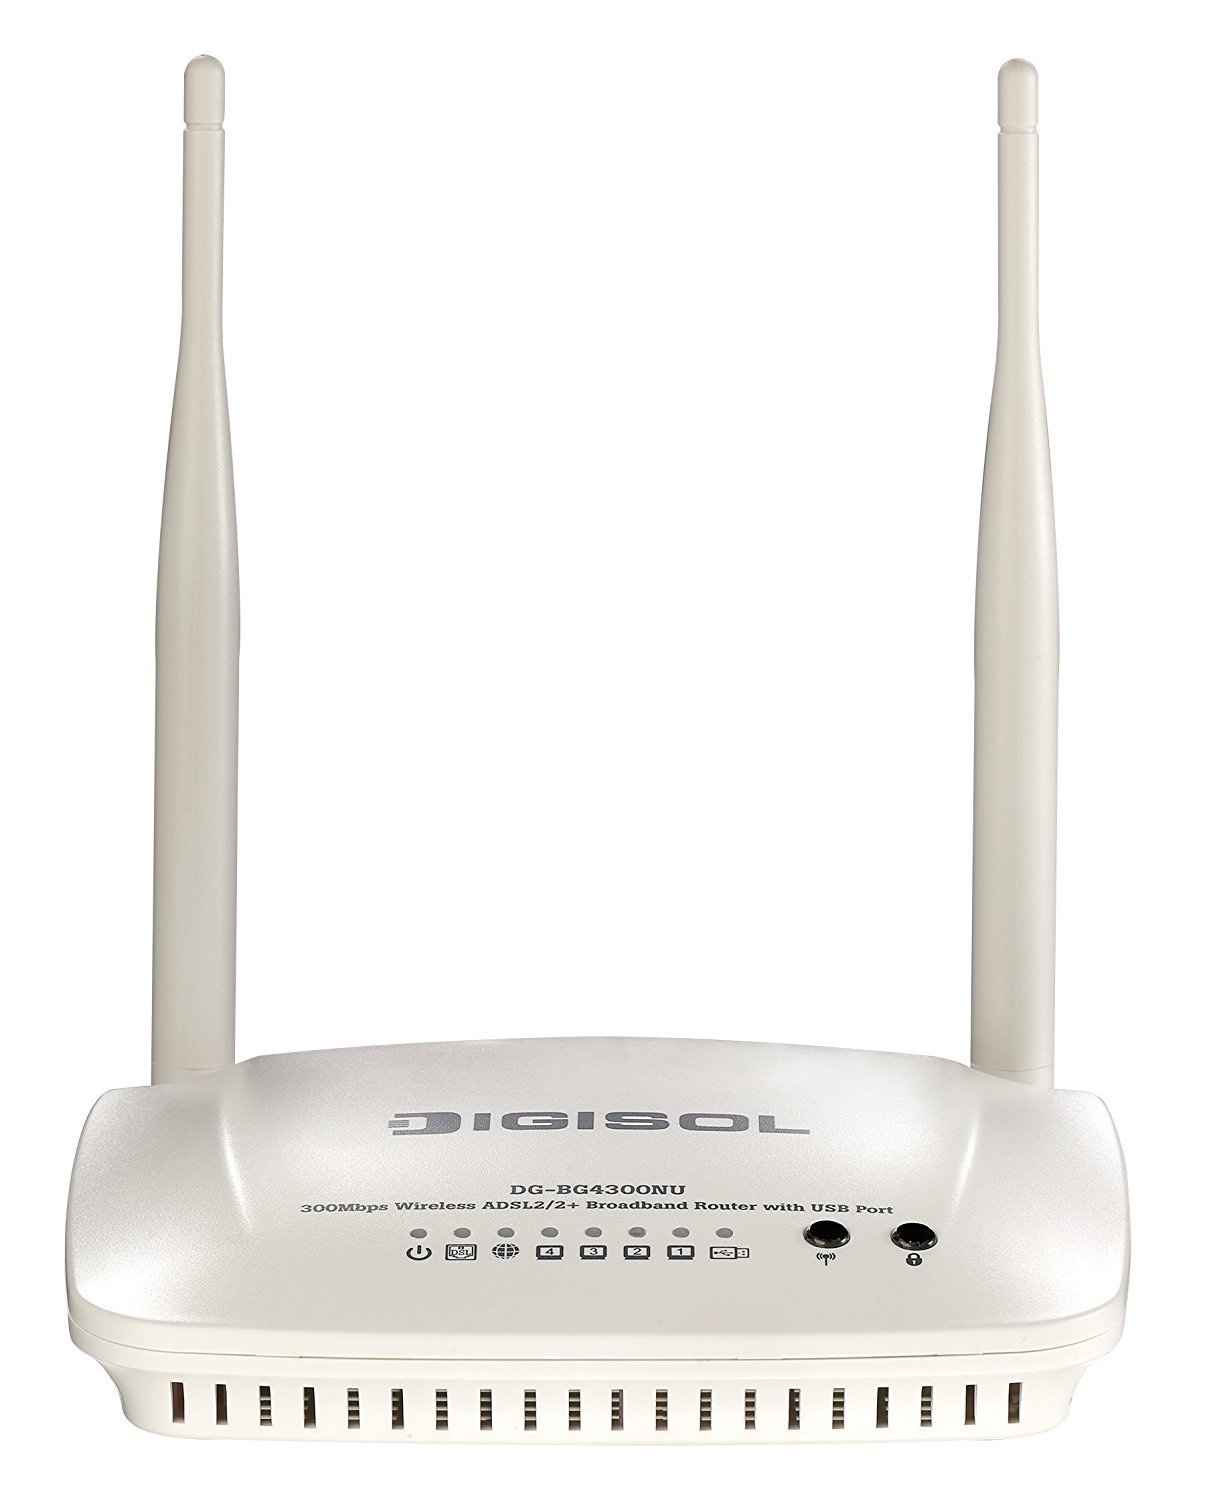 Digisol DG-BG4300NU Wireless ADSL 2/2+ Broadband Router with USB Port